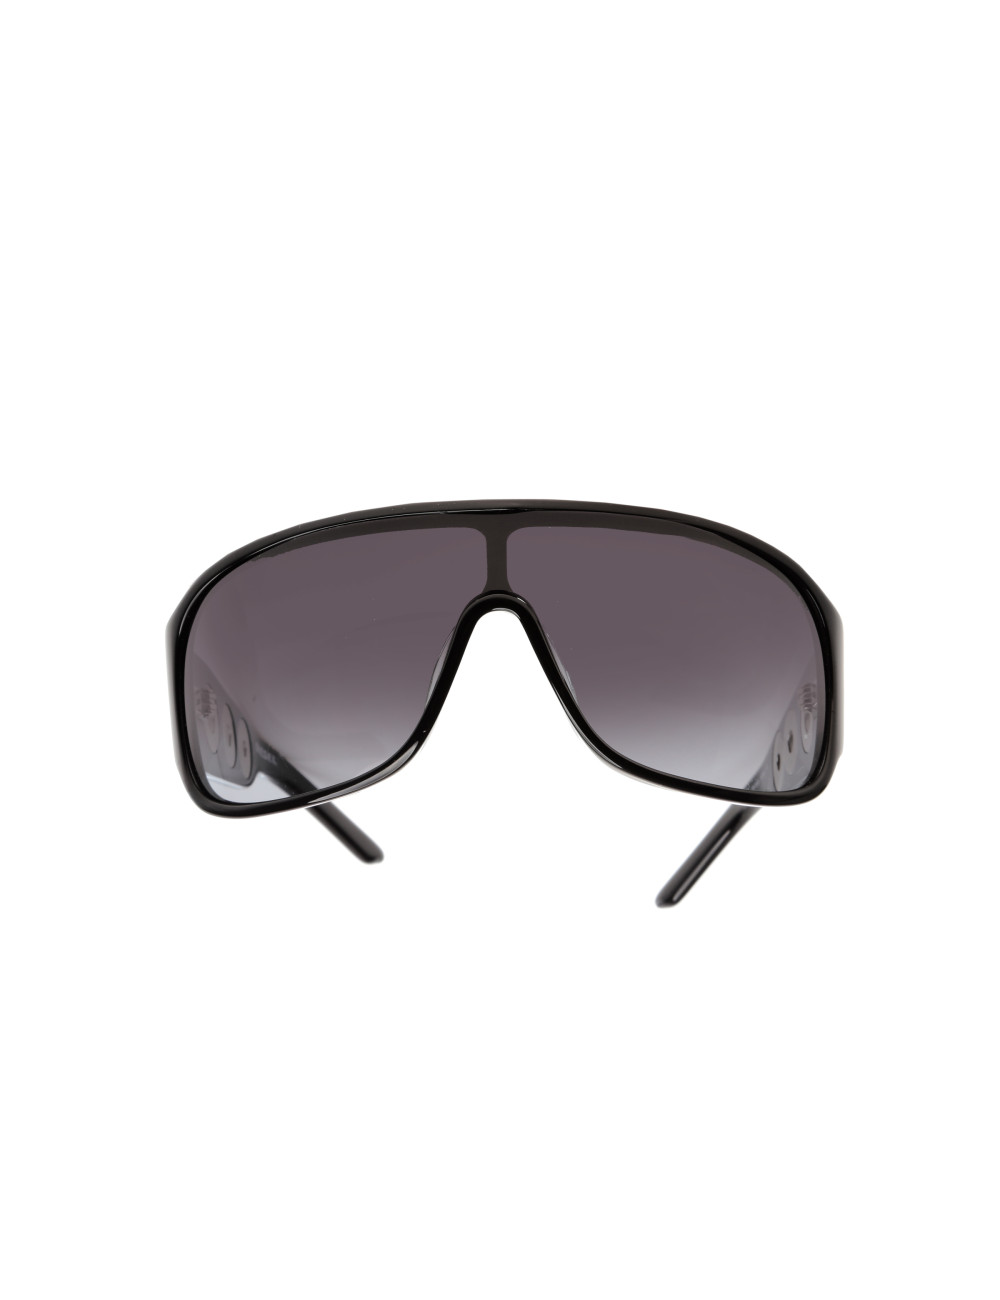 Diesel 00's Black Mask Sunglasses